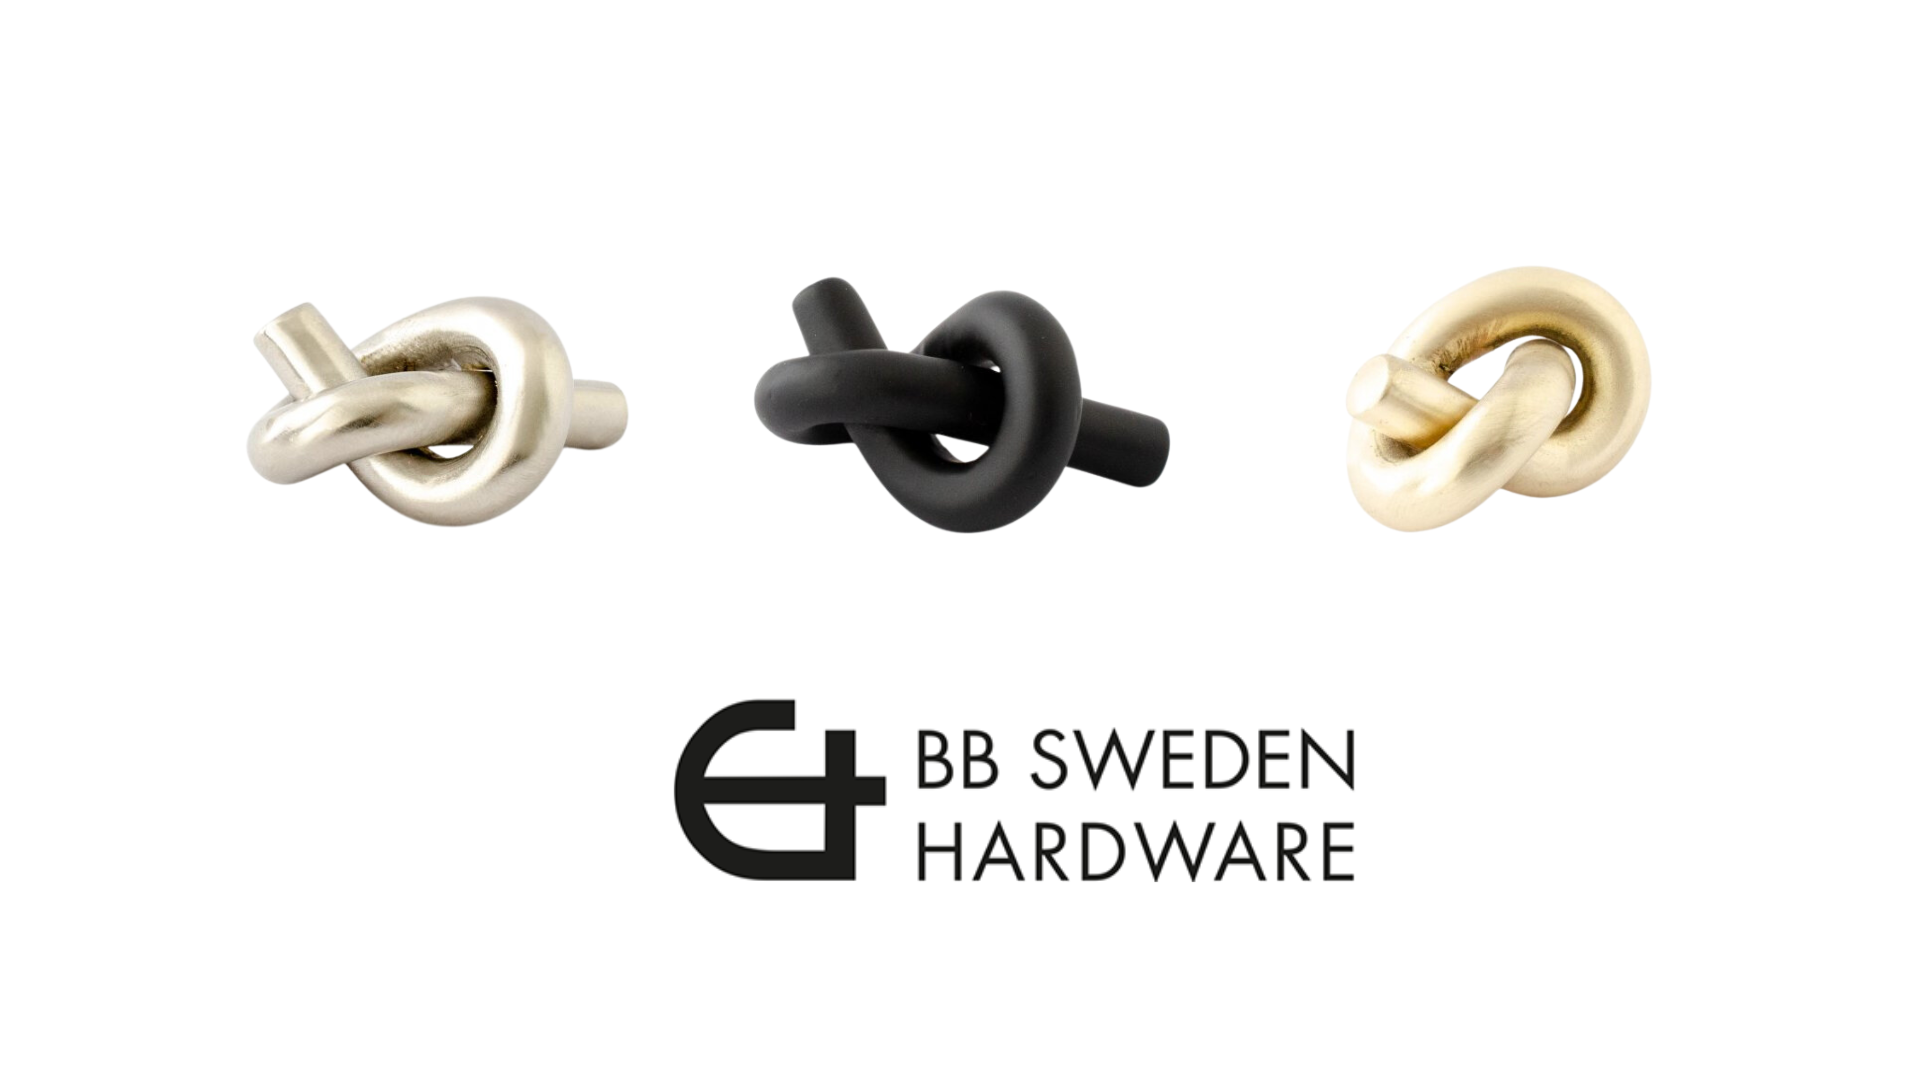 Furniture hardware made in Sweden